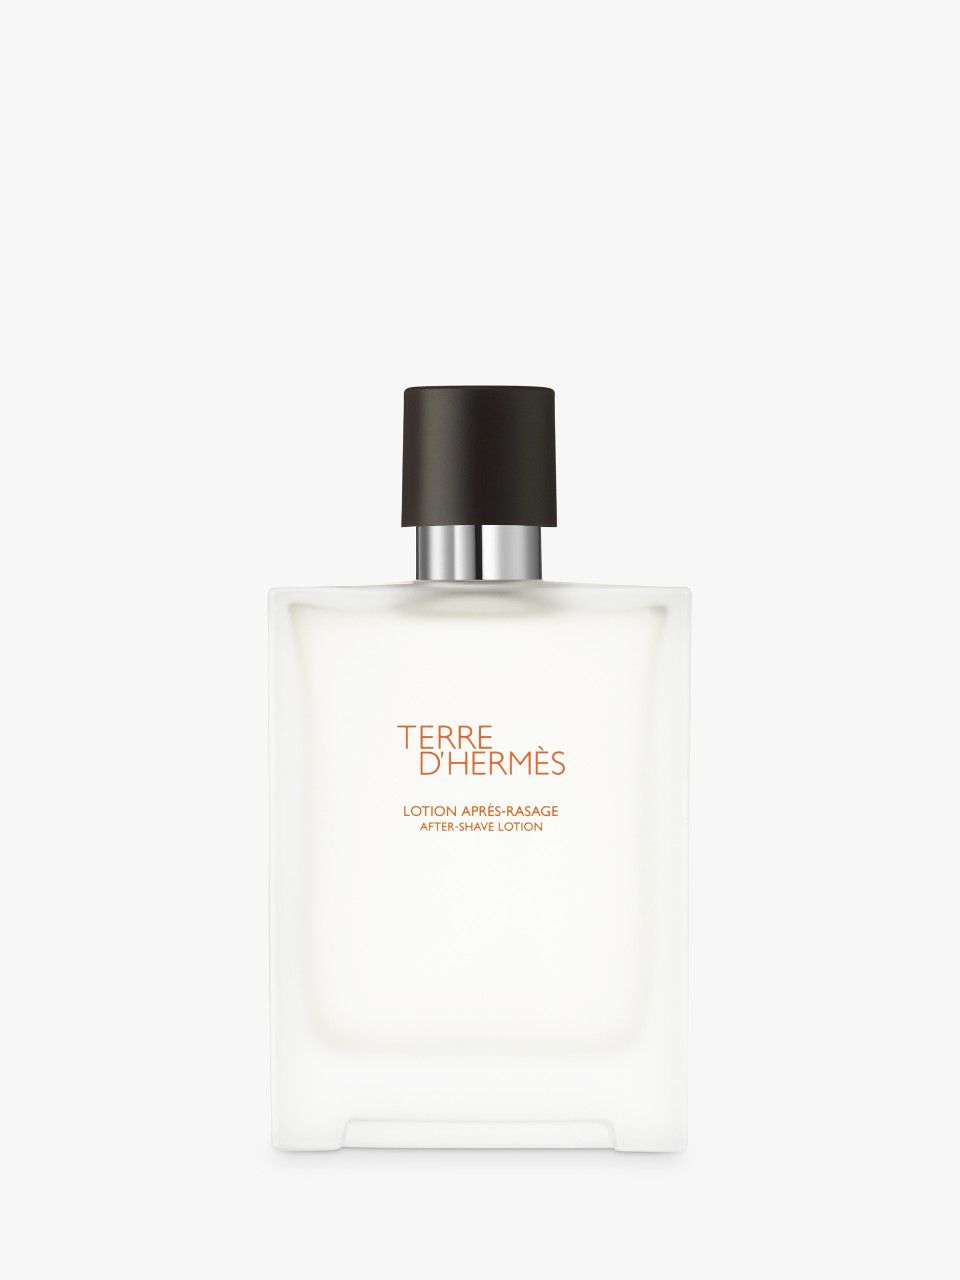 Hermès Terre d’Hermès After-Shave Lotion, 100ml at John Lewis & Partners